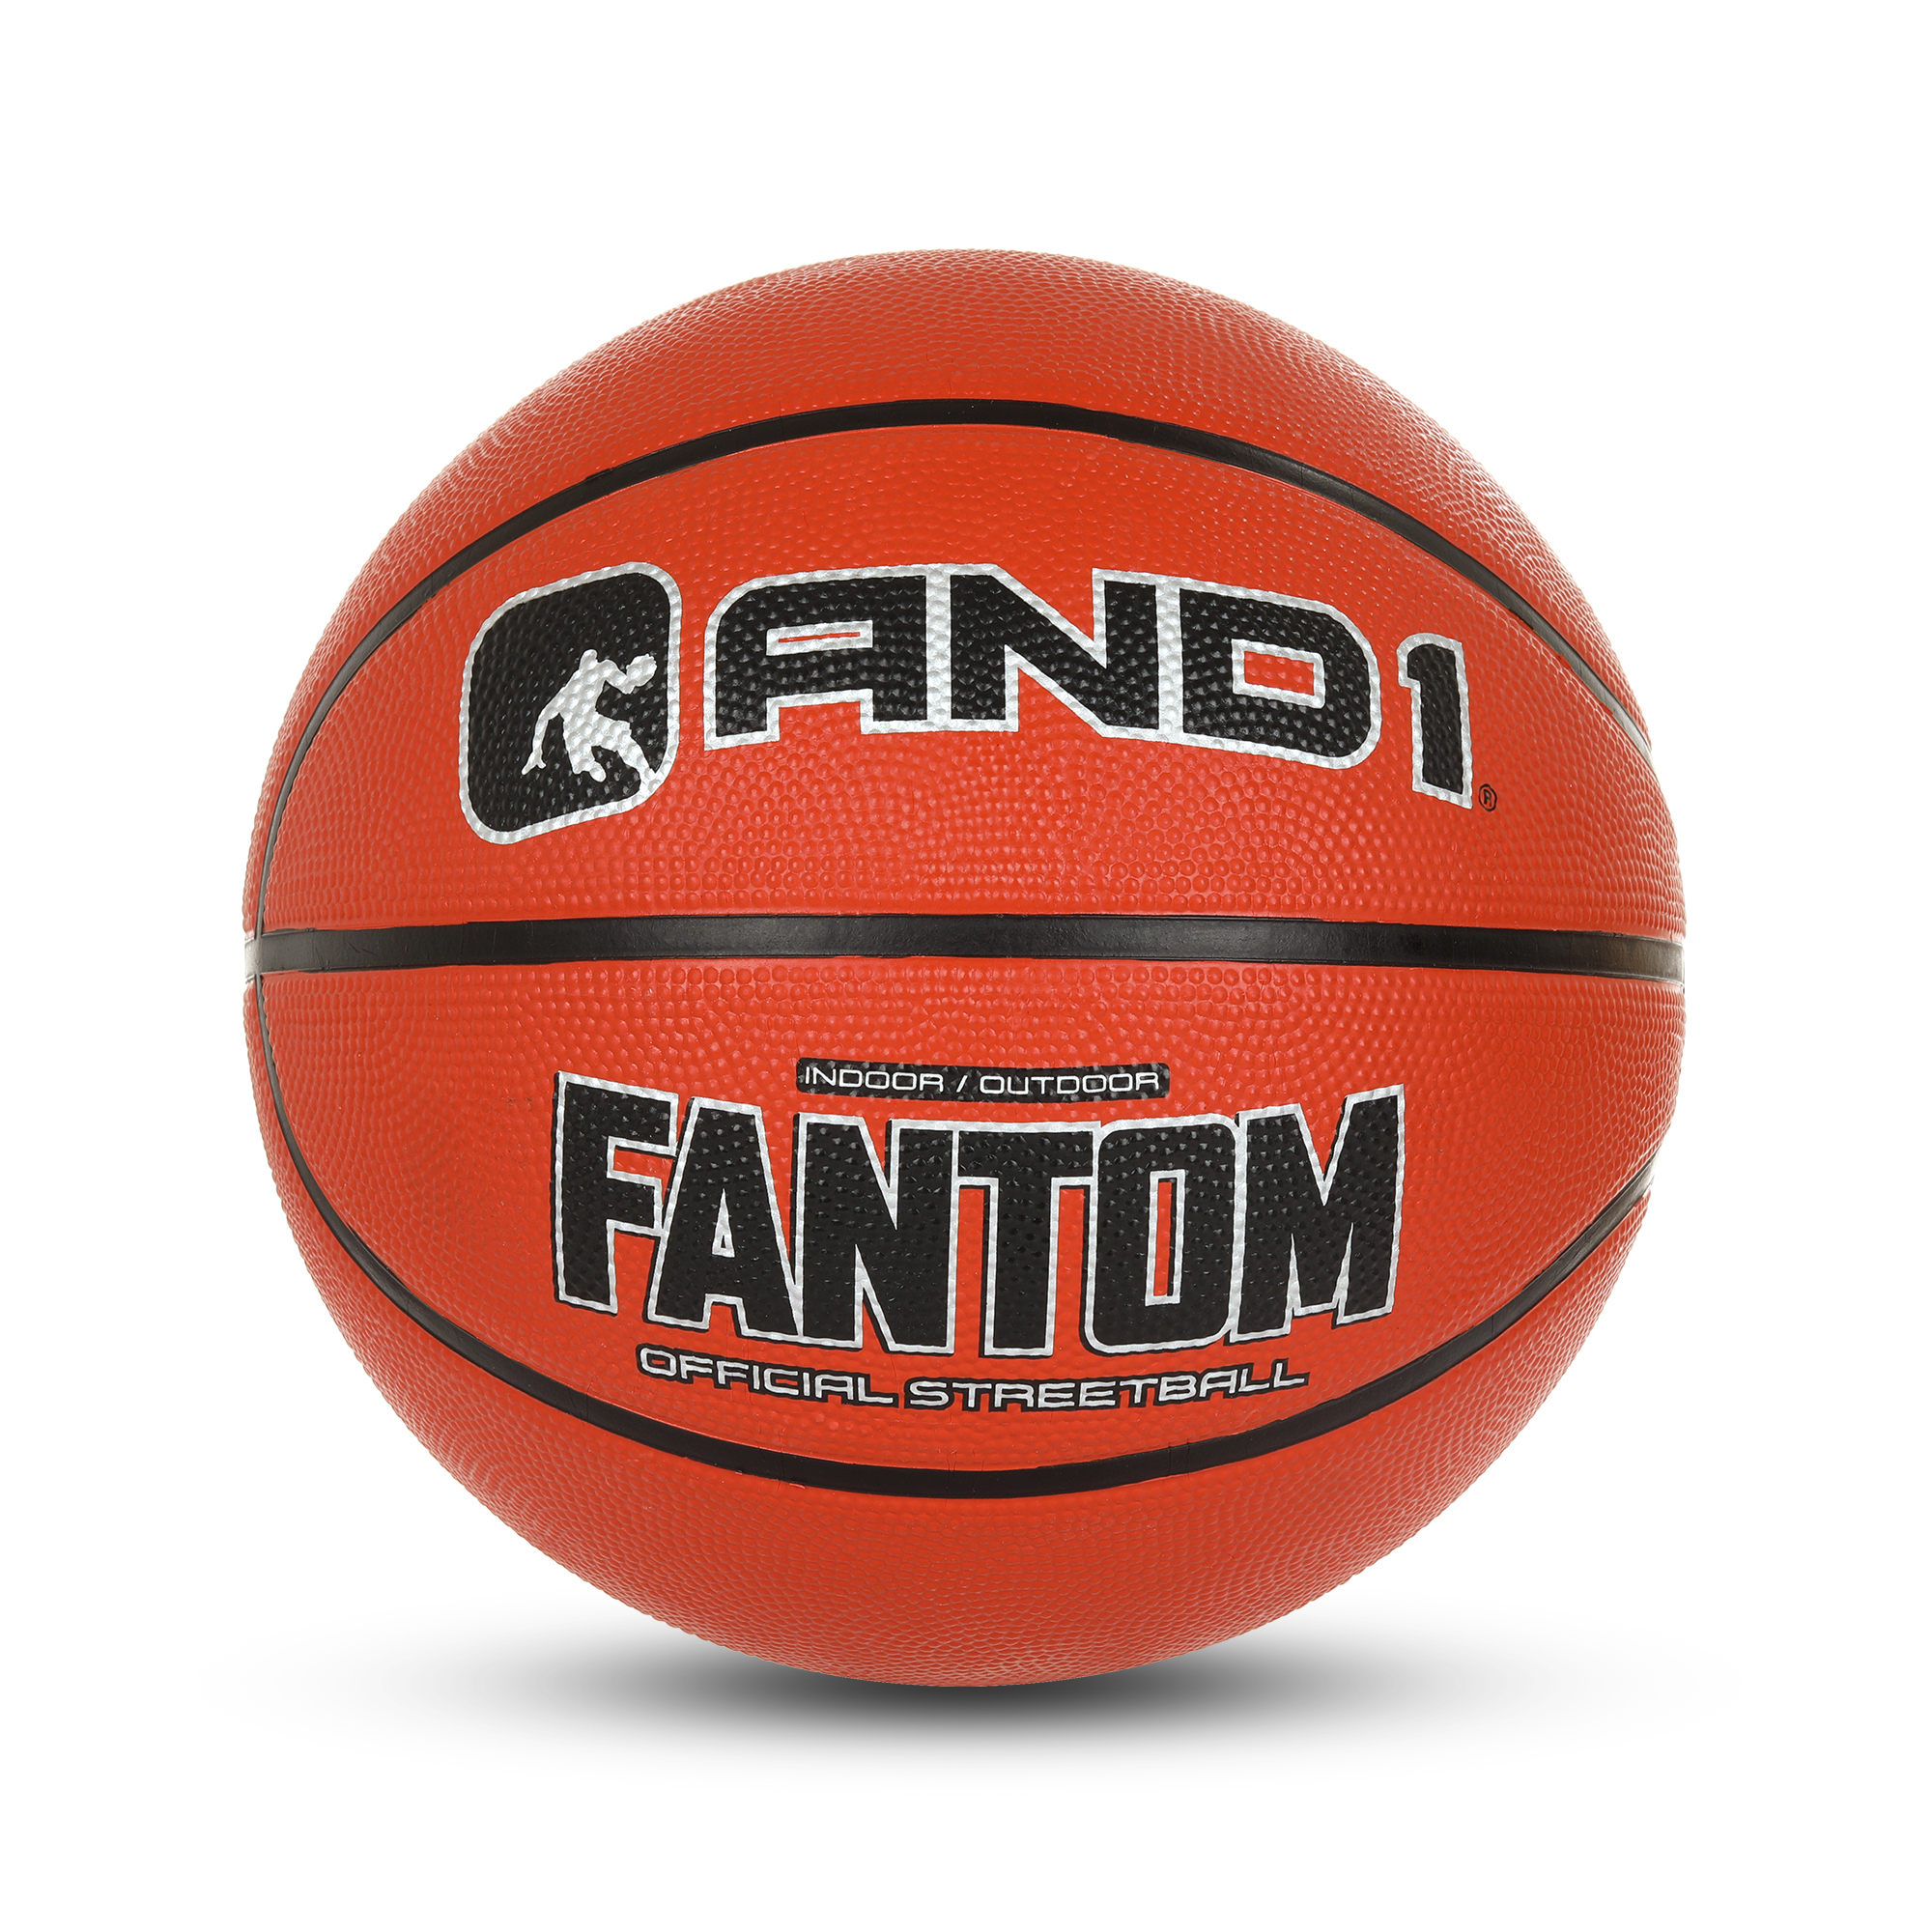 AND1 Fantom Street Basketball 29.5 Full Size, Orange - image 1 of 7